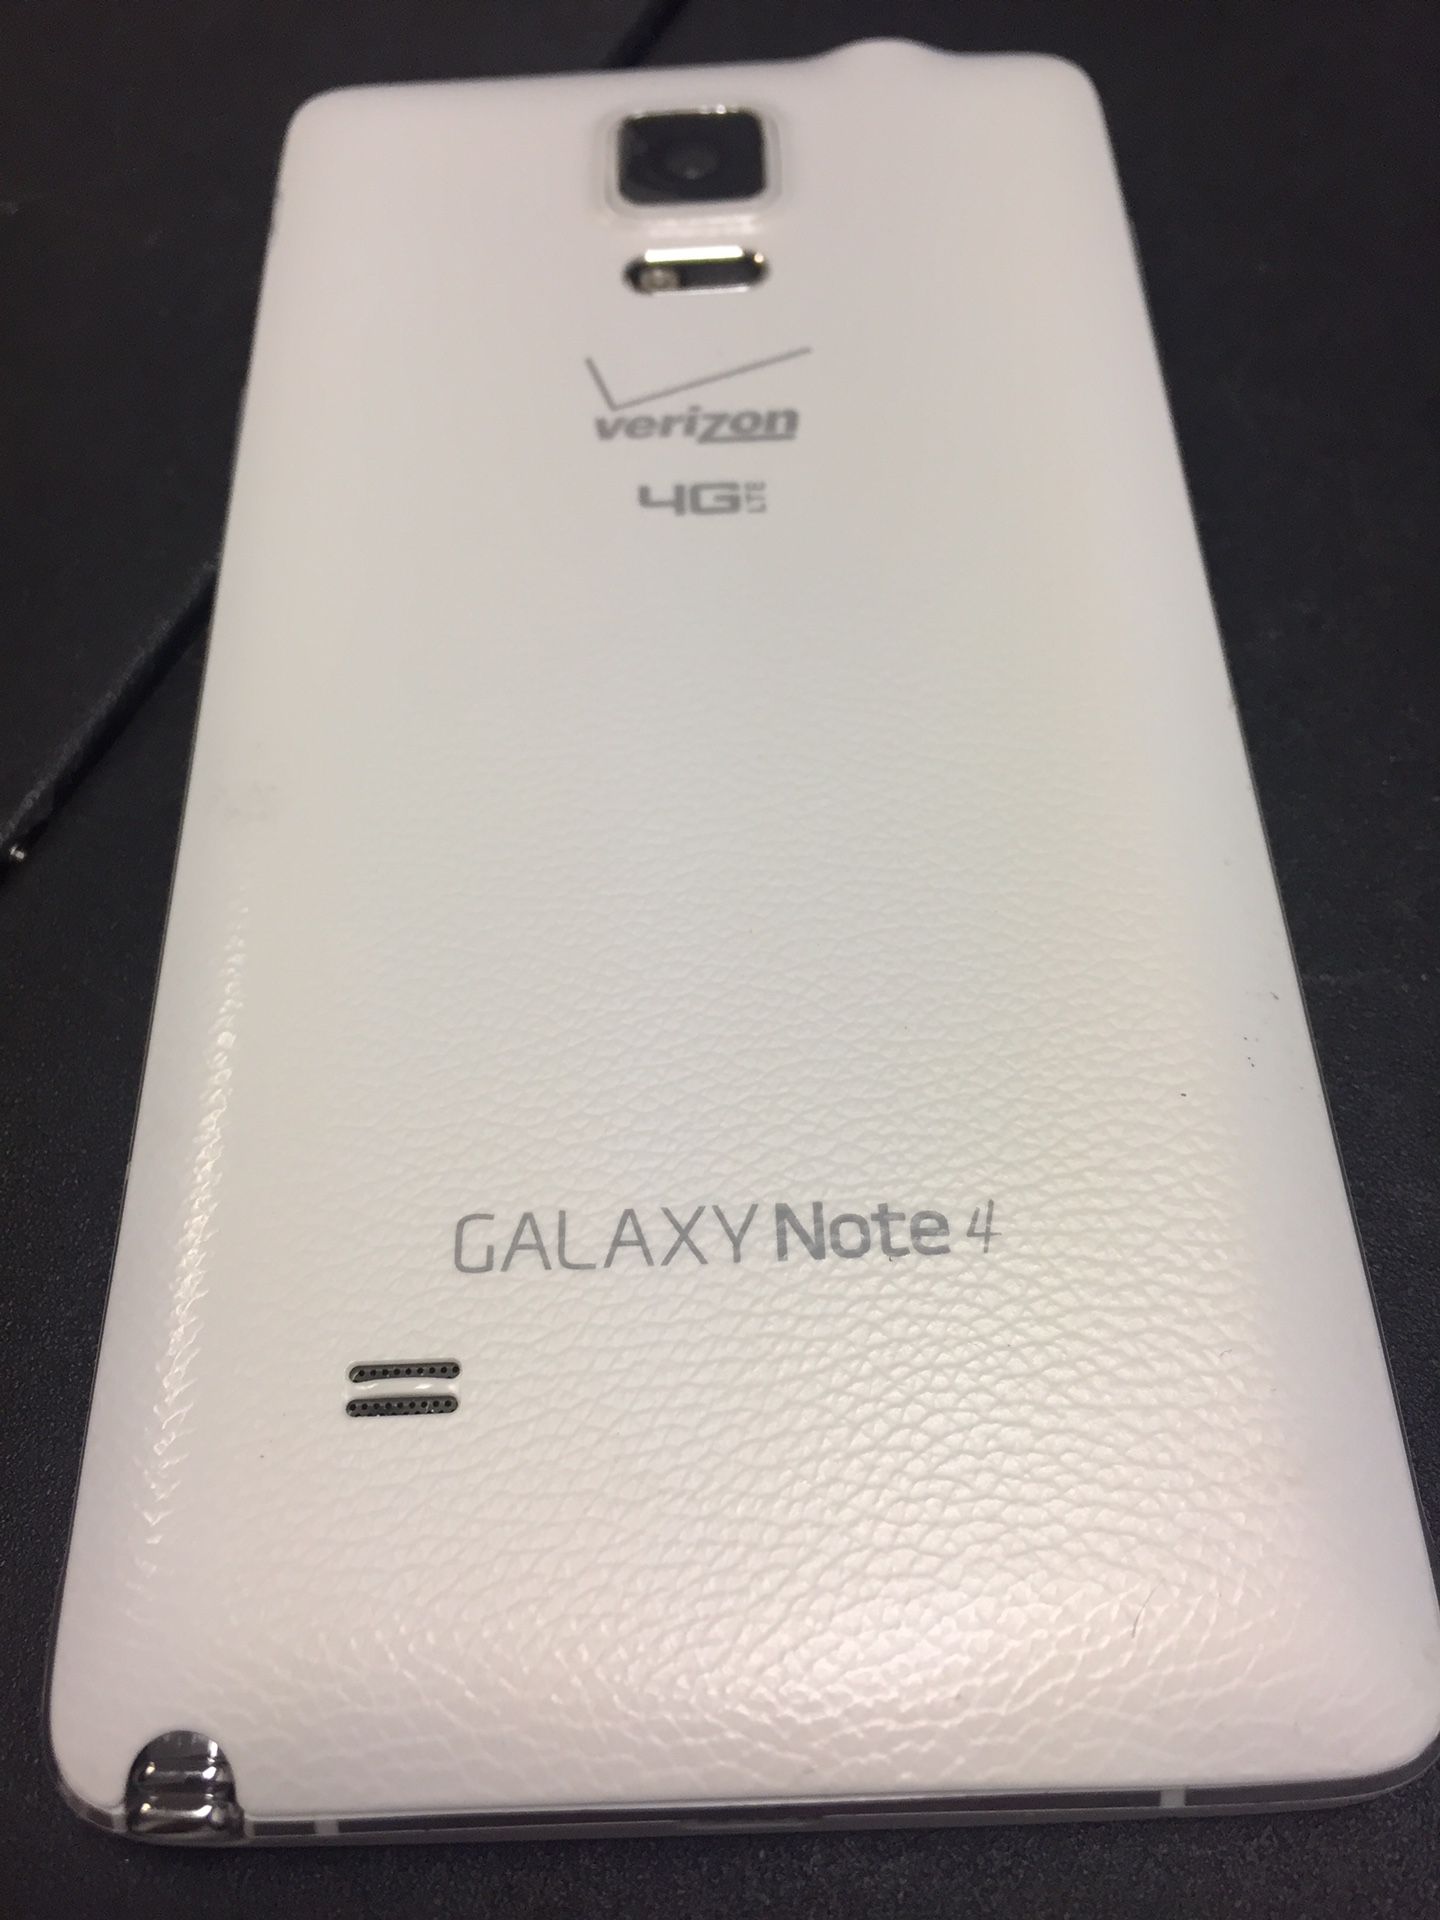 Samsung Galaxy Note 4 unlocked with warranty!